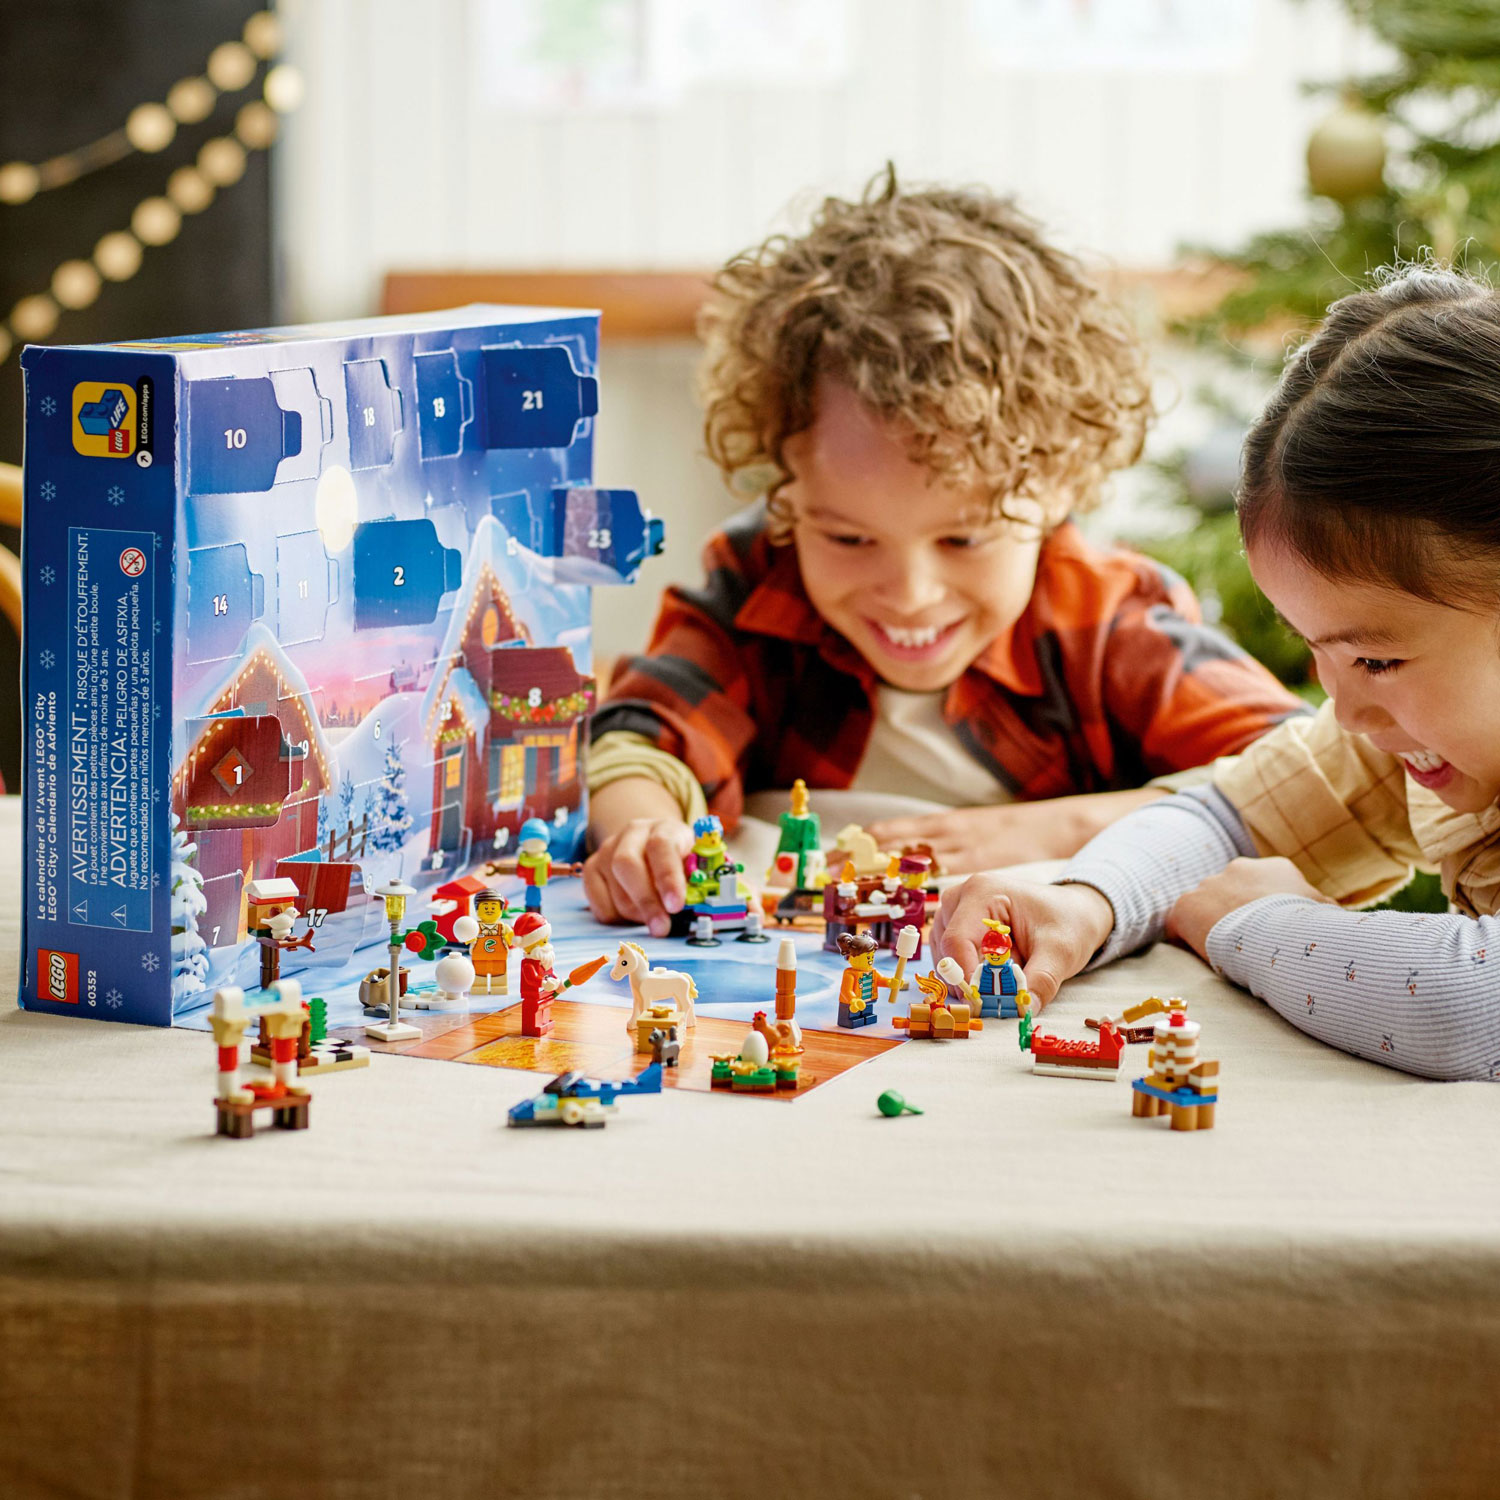 LEGO City: Advent Calendar toy